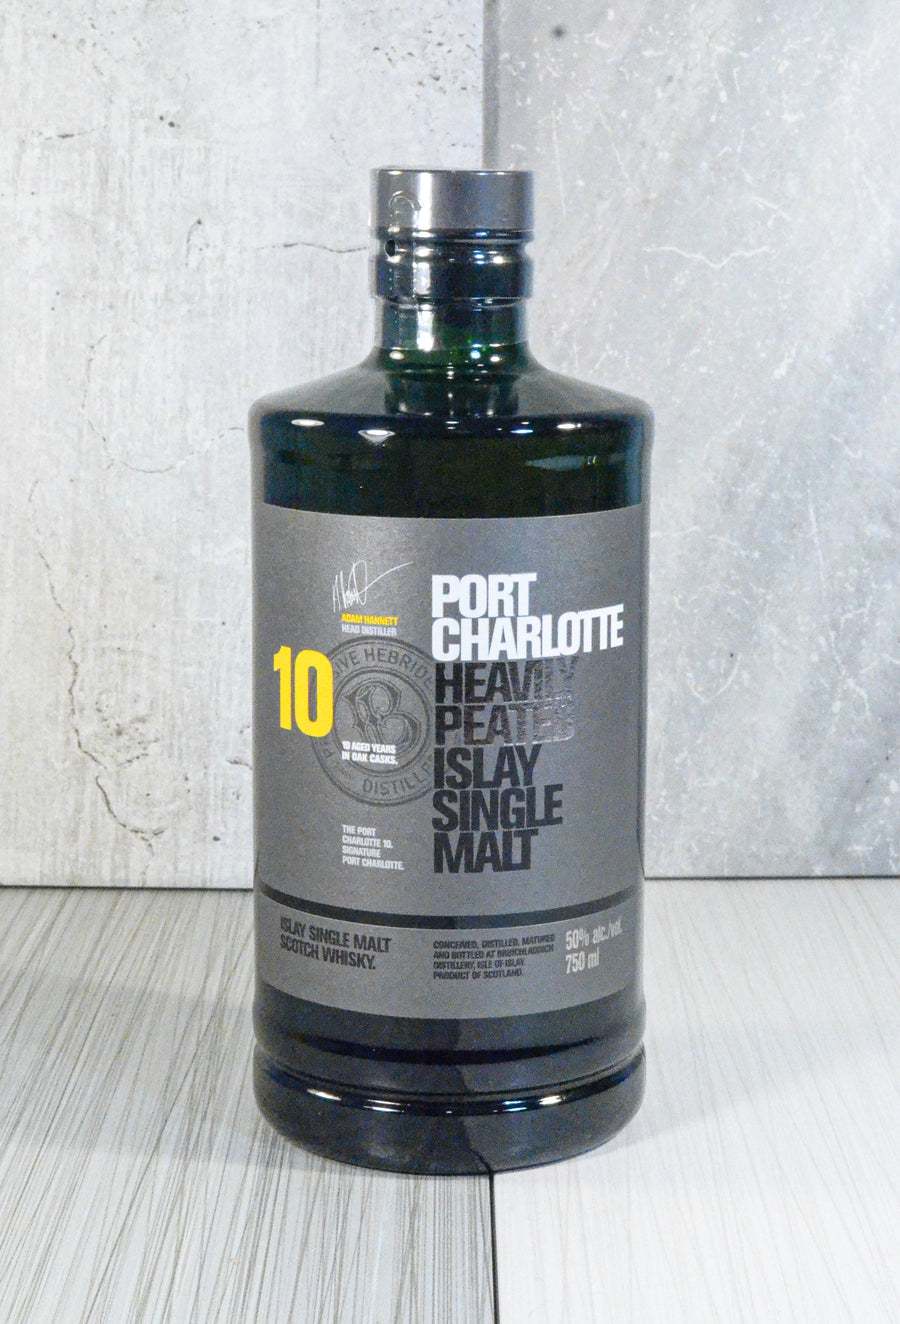 Bruichladdich Port Charlotte Heavily Peated Islay Single Malt Whisky